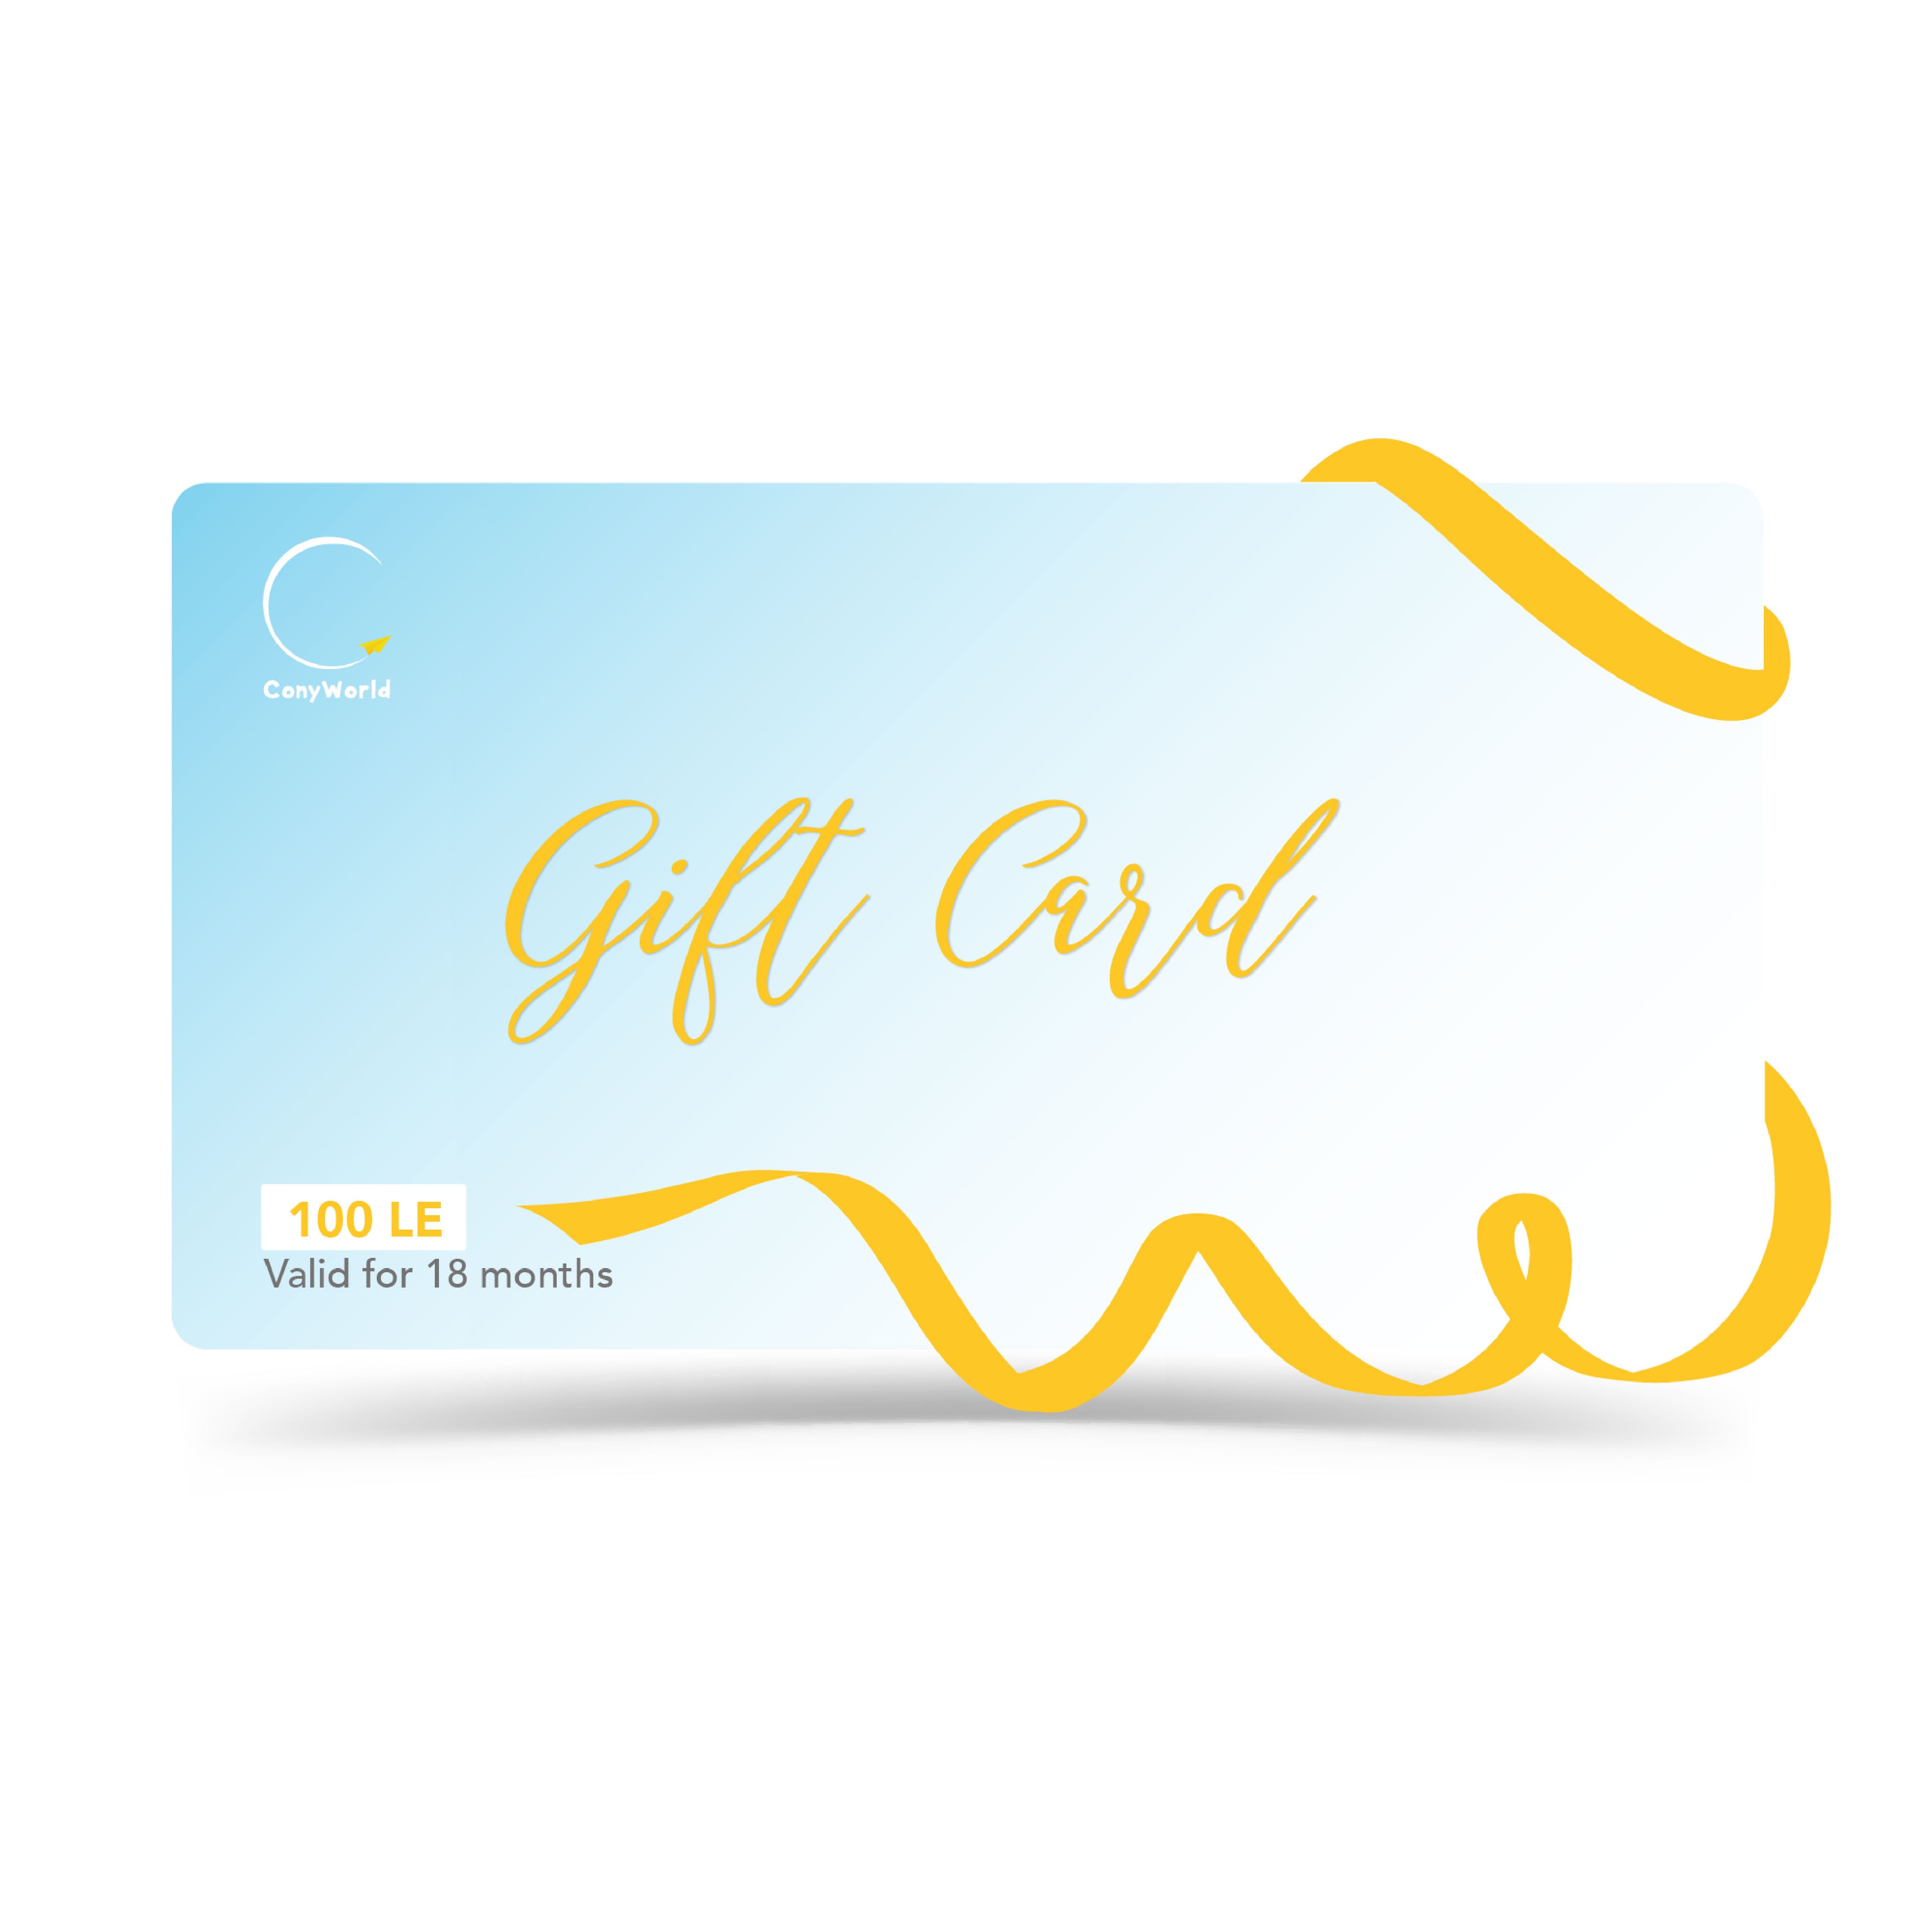 ConyWorld Gift Card - Cony World بطاقة الهدايا من